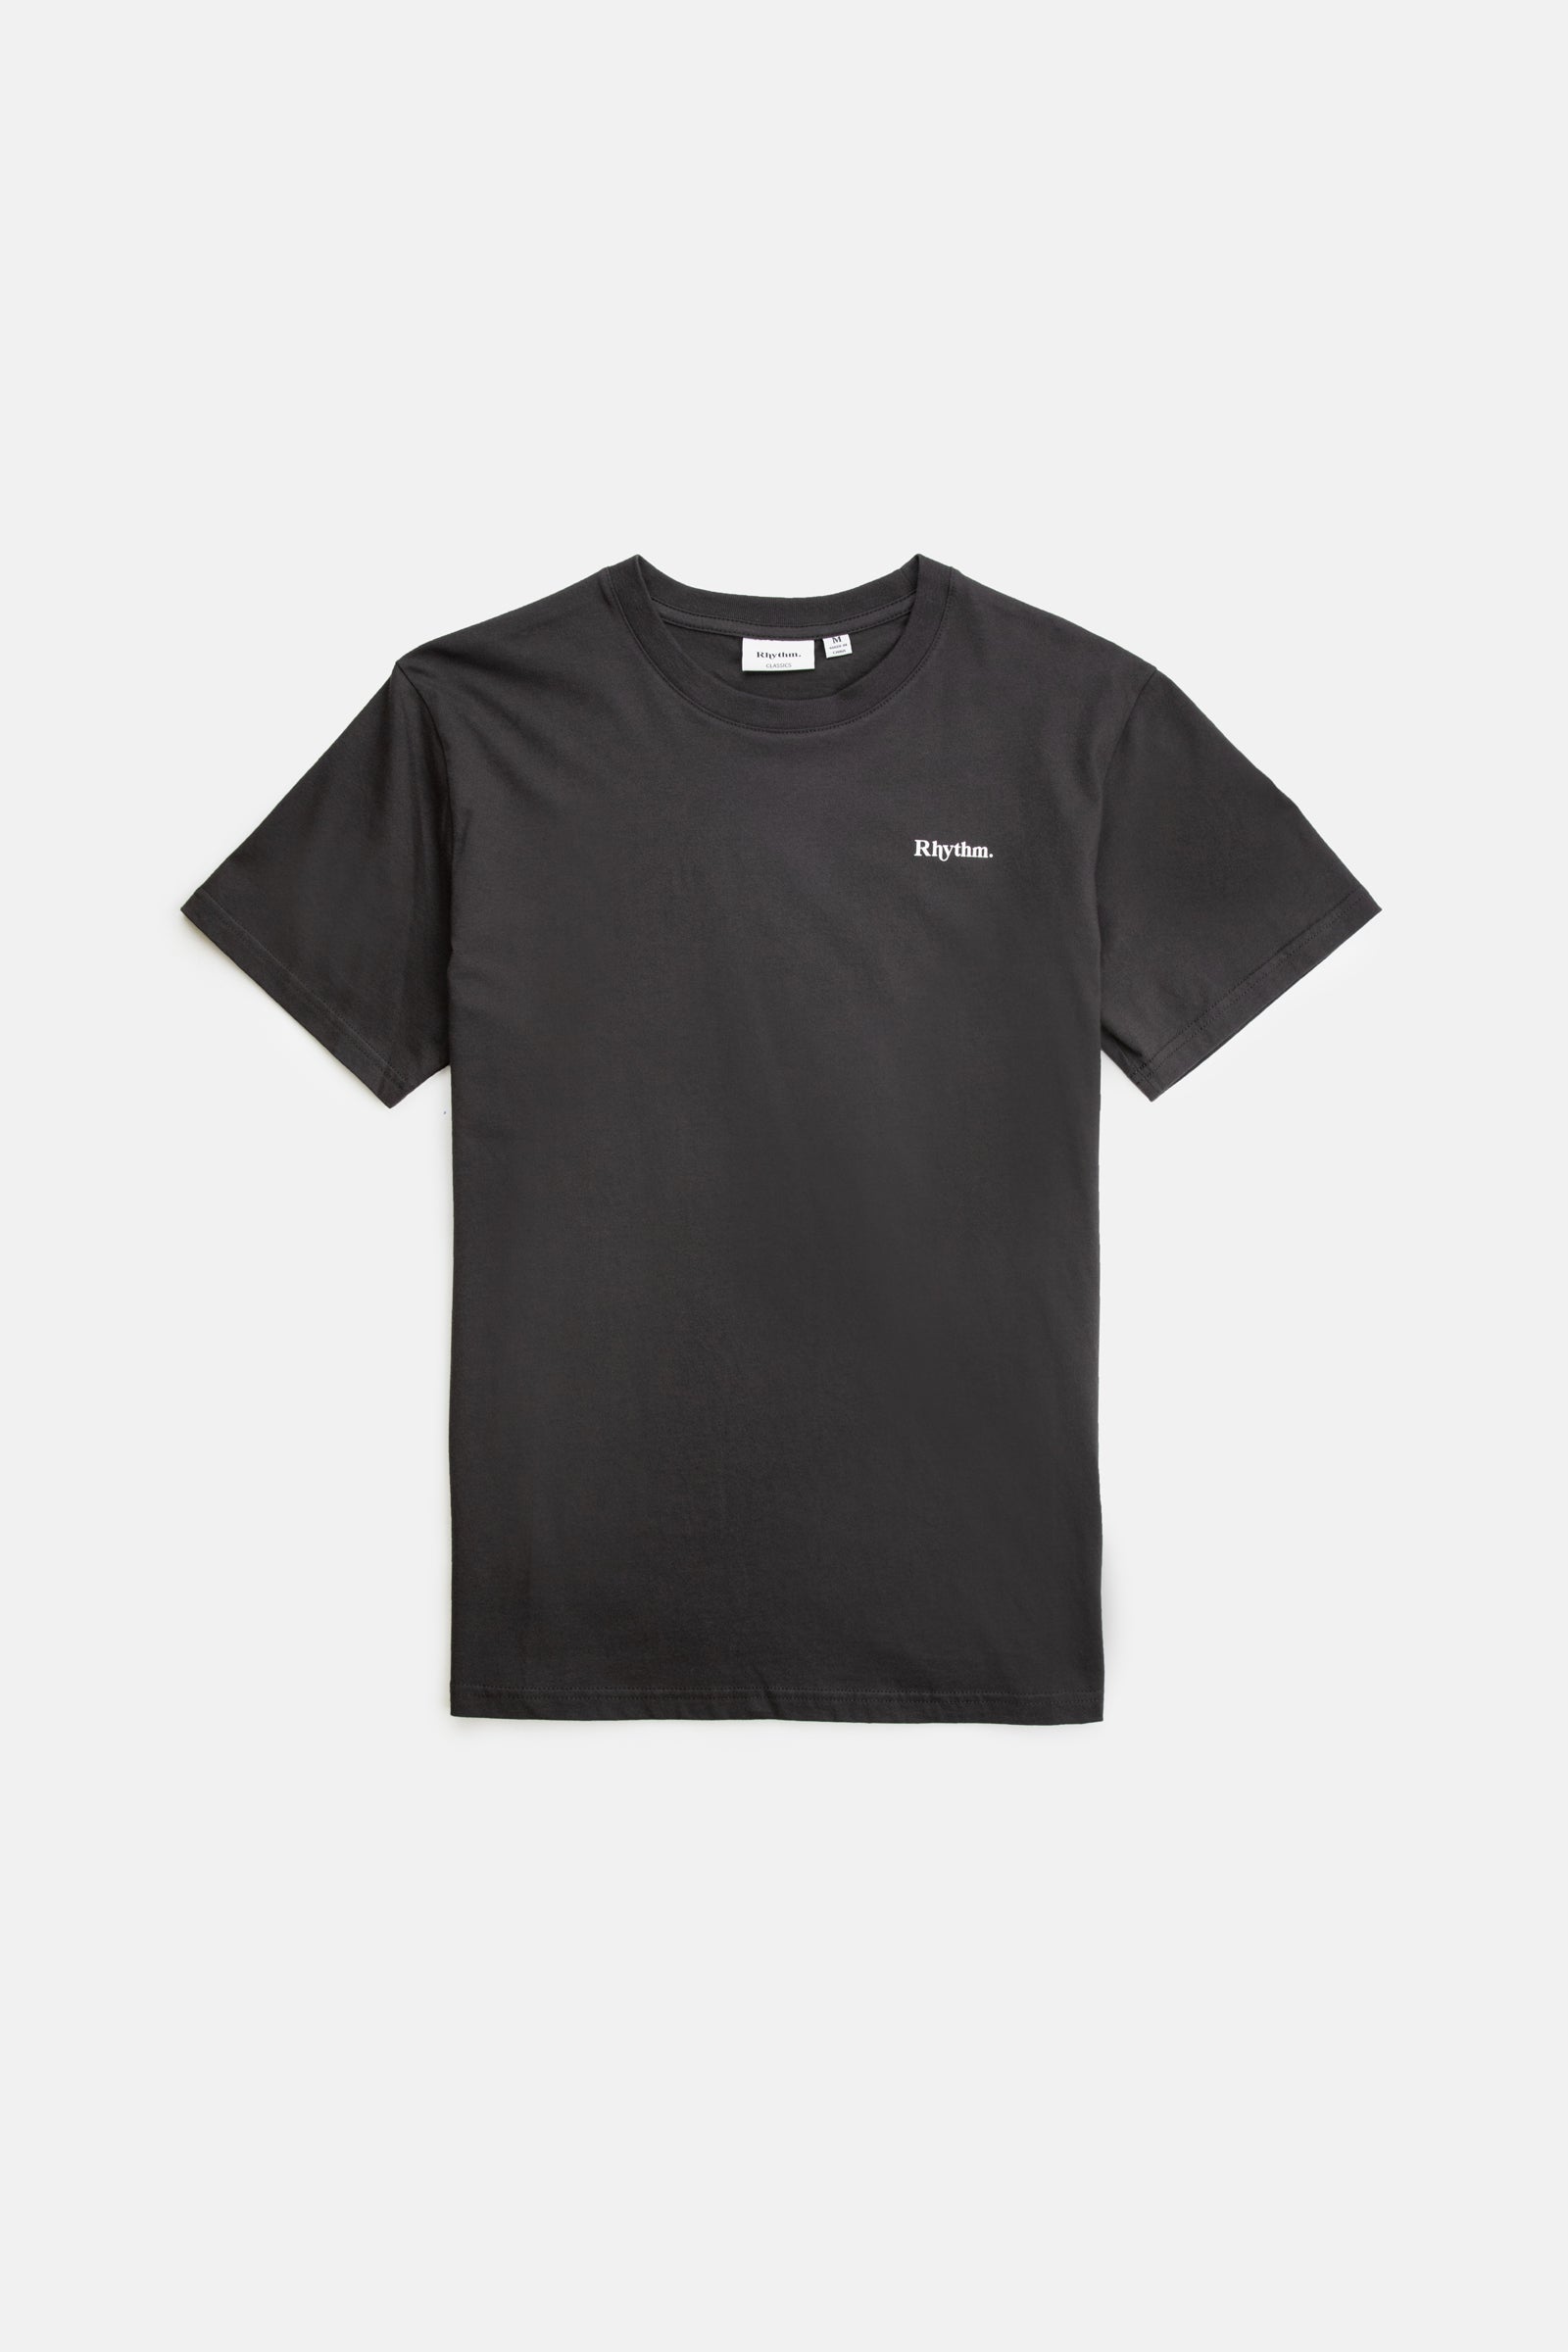 Organic Cotton Black Script Logo T-Shirt – Rhythm EU Standard